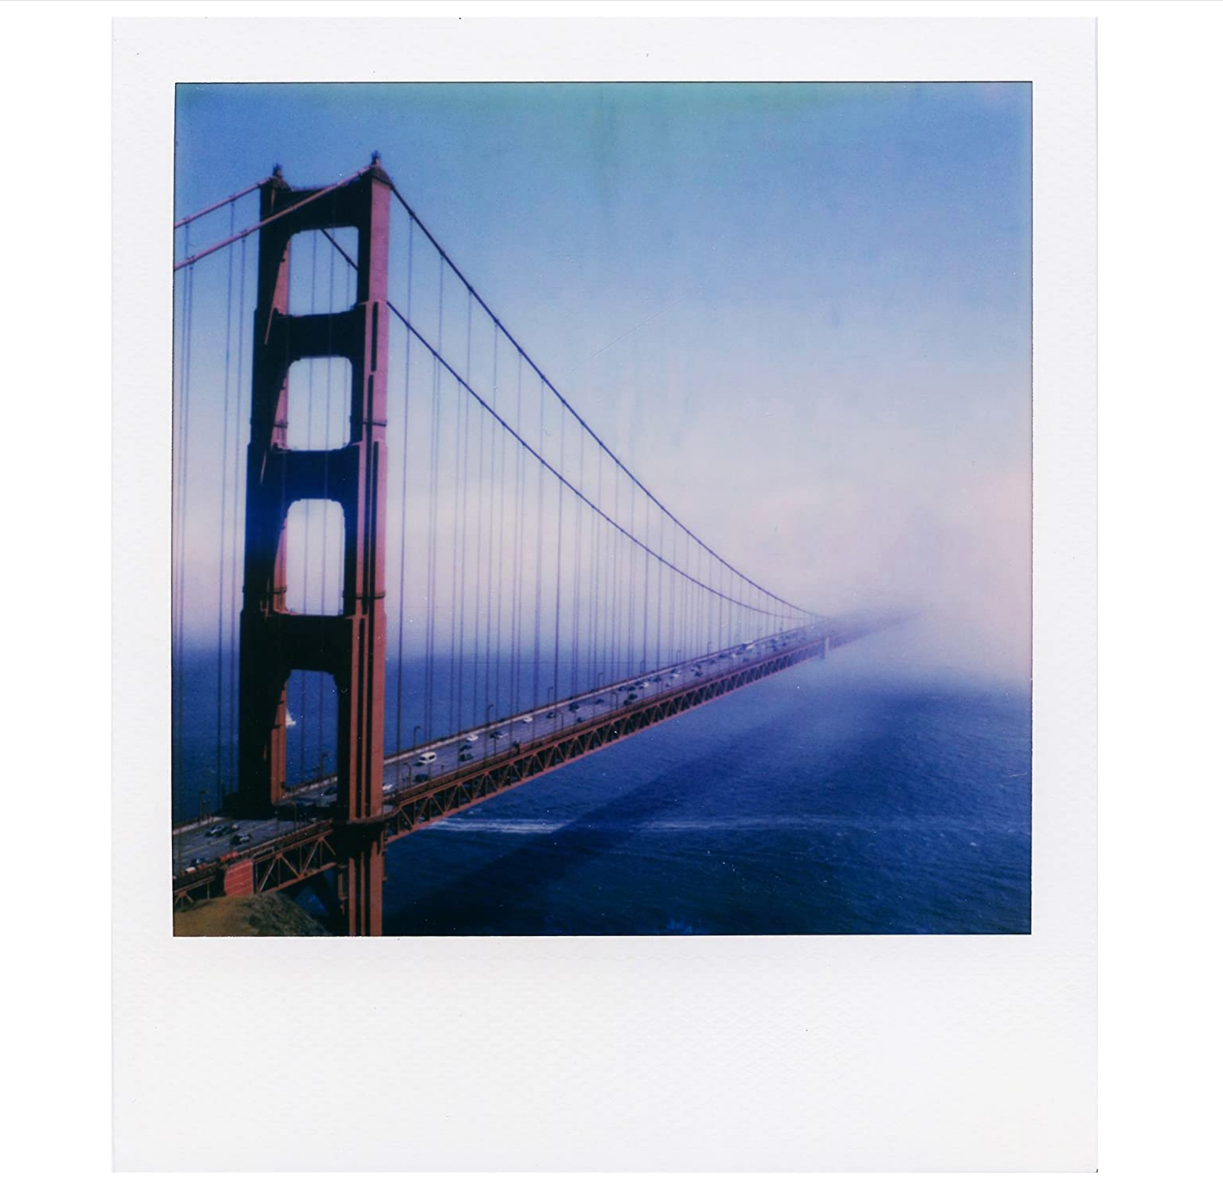 Polaroid I-Type Colour Instant Film 5 pack (40 shots)